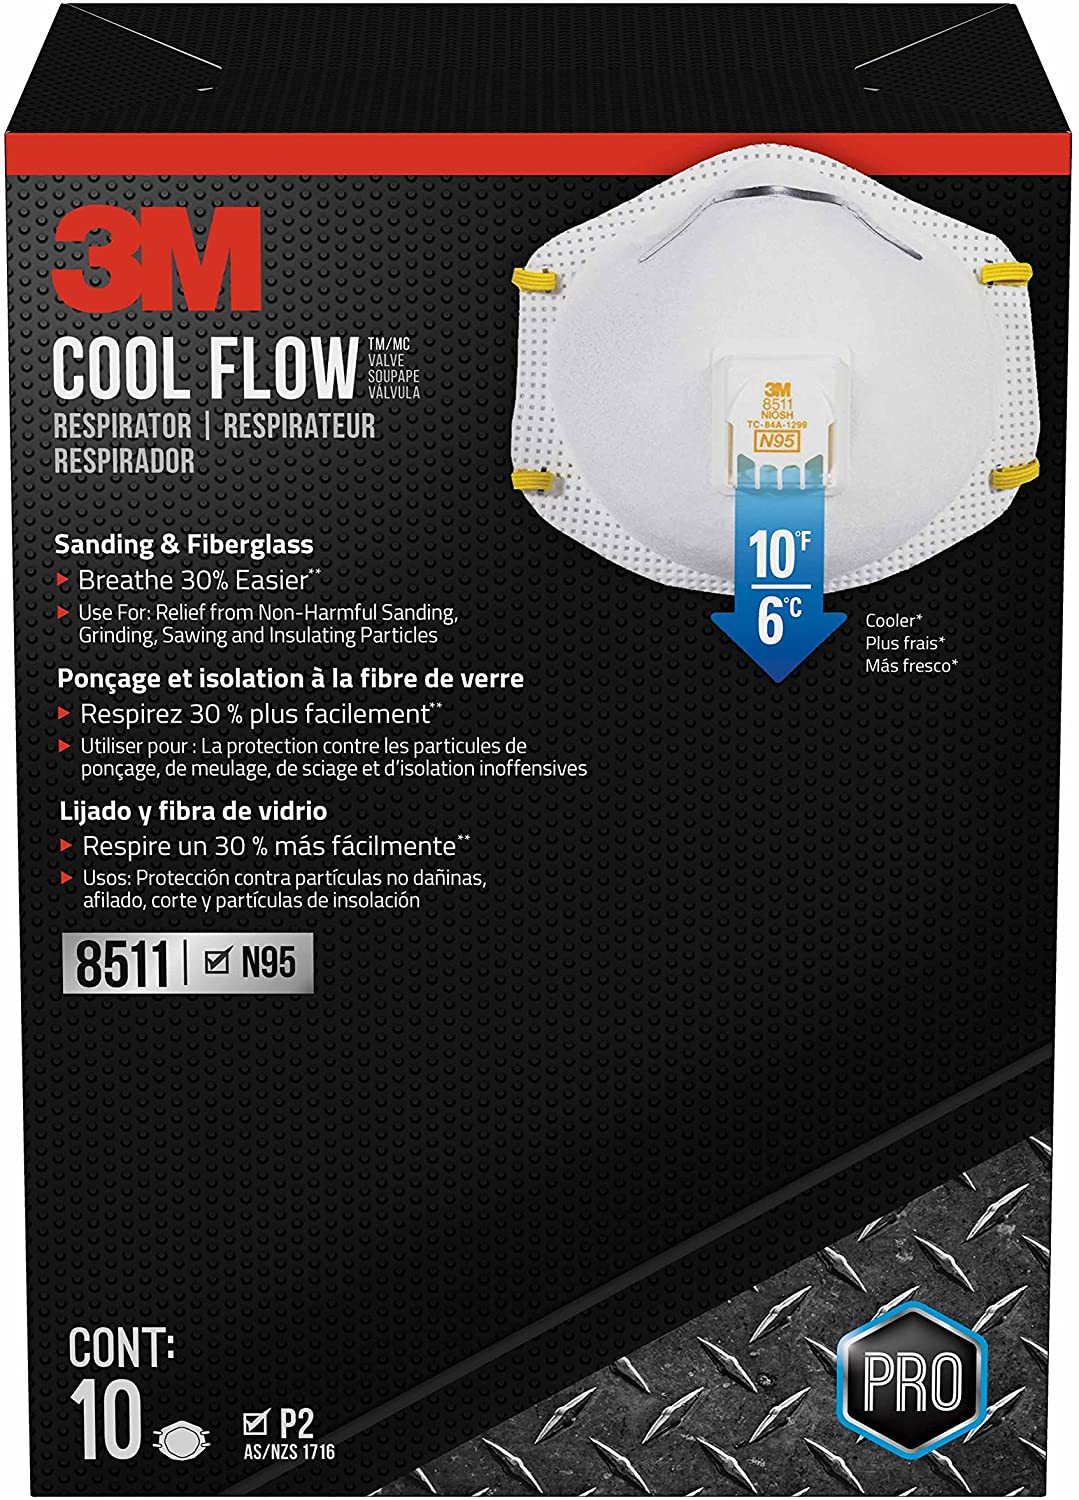 (10-Pack) 3M 8511, N95, Multi-Purpose Respirator, White, Cool Flow Valve $3.49 + FS w/ W+